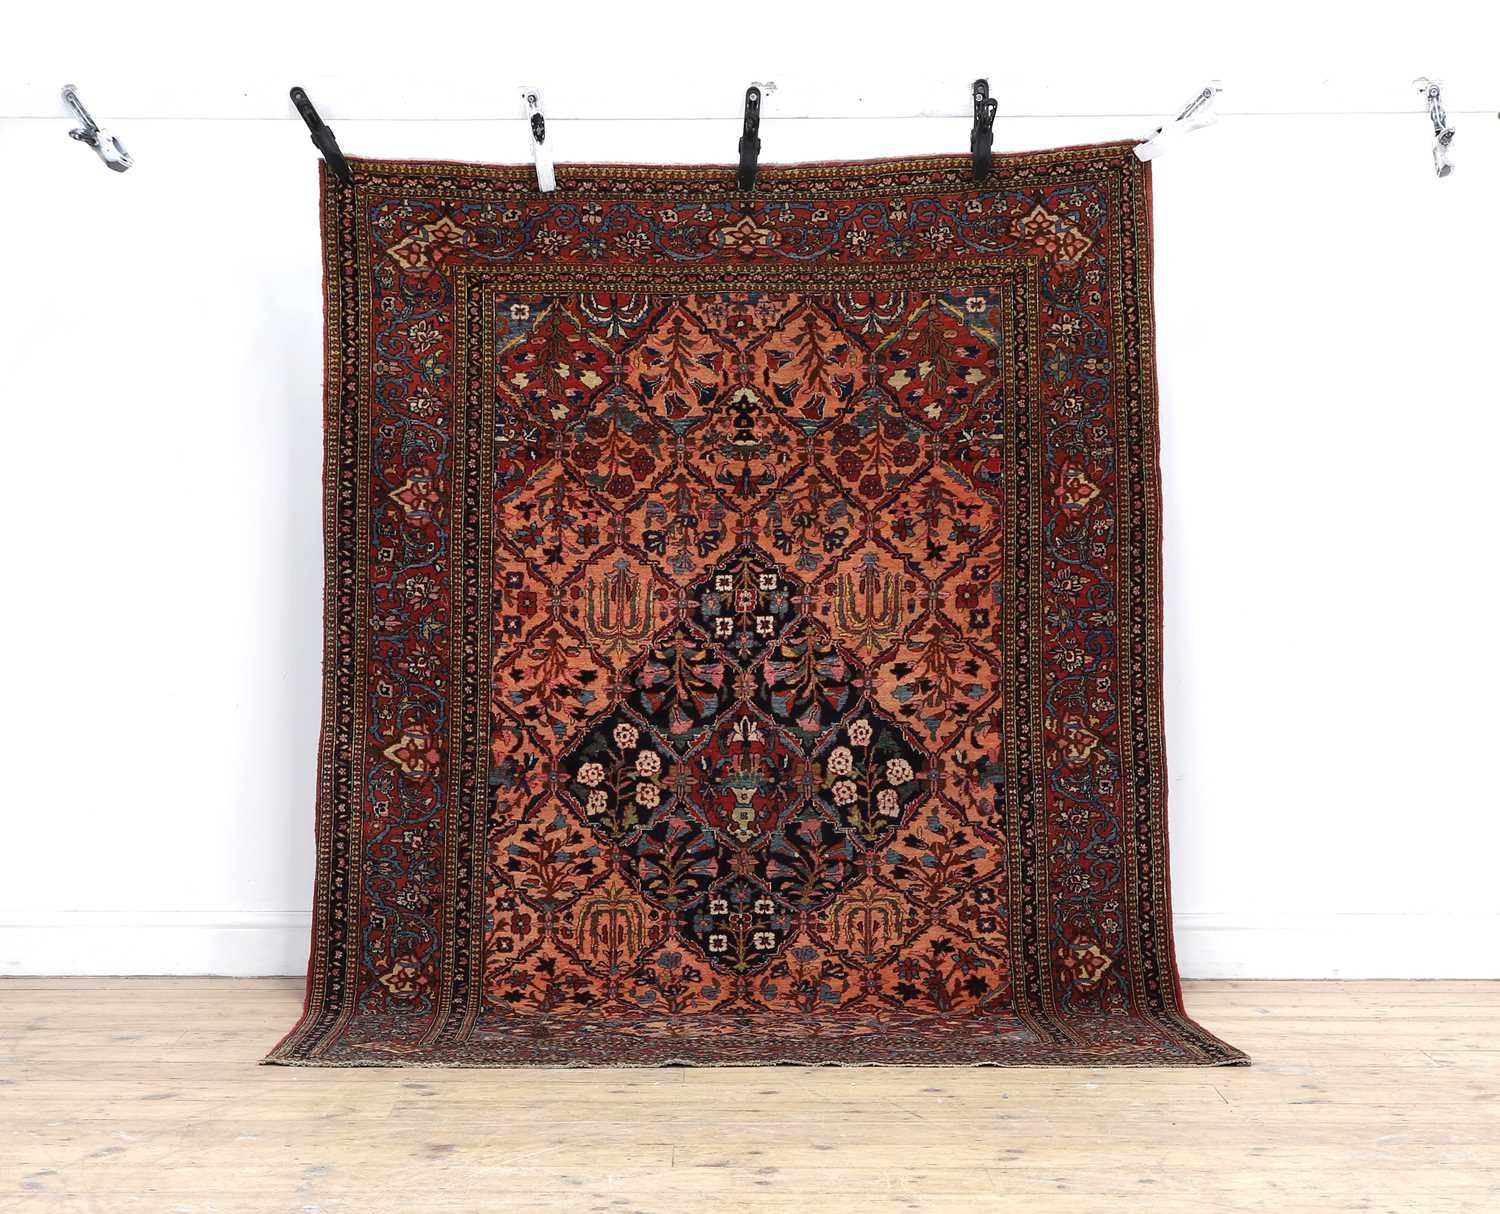 A Kashan wool rug